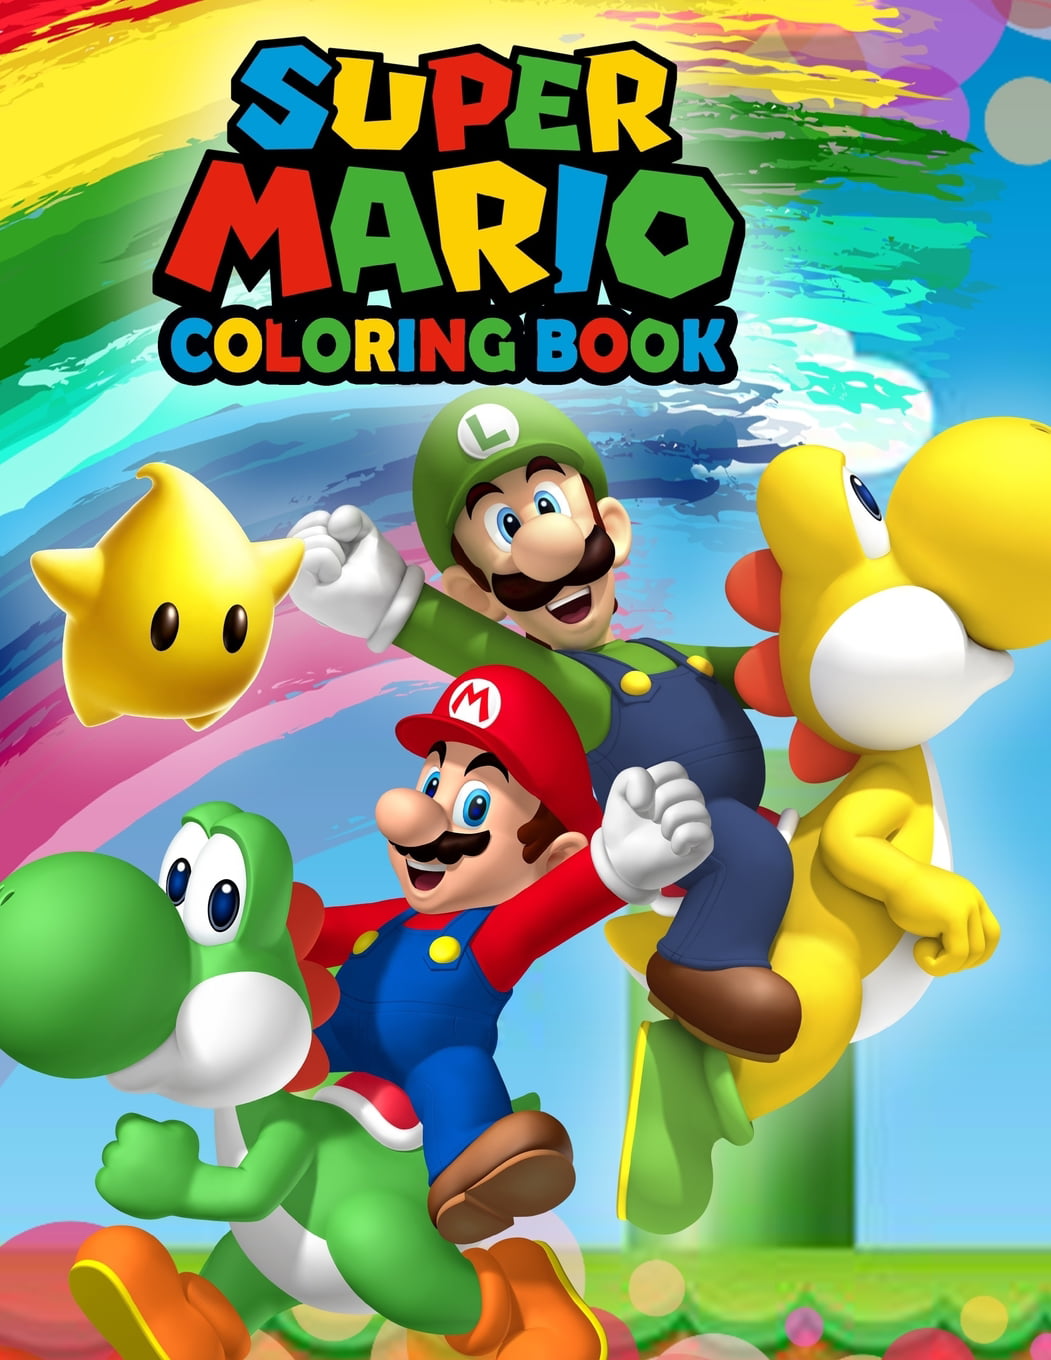 Super Mario JUMBO Coloring Book: 75 Illustrations (Paperback)